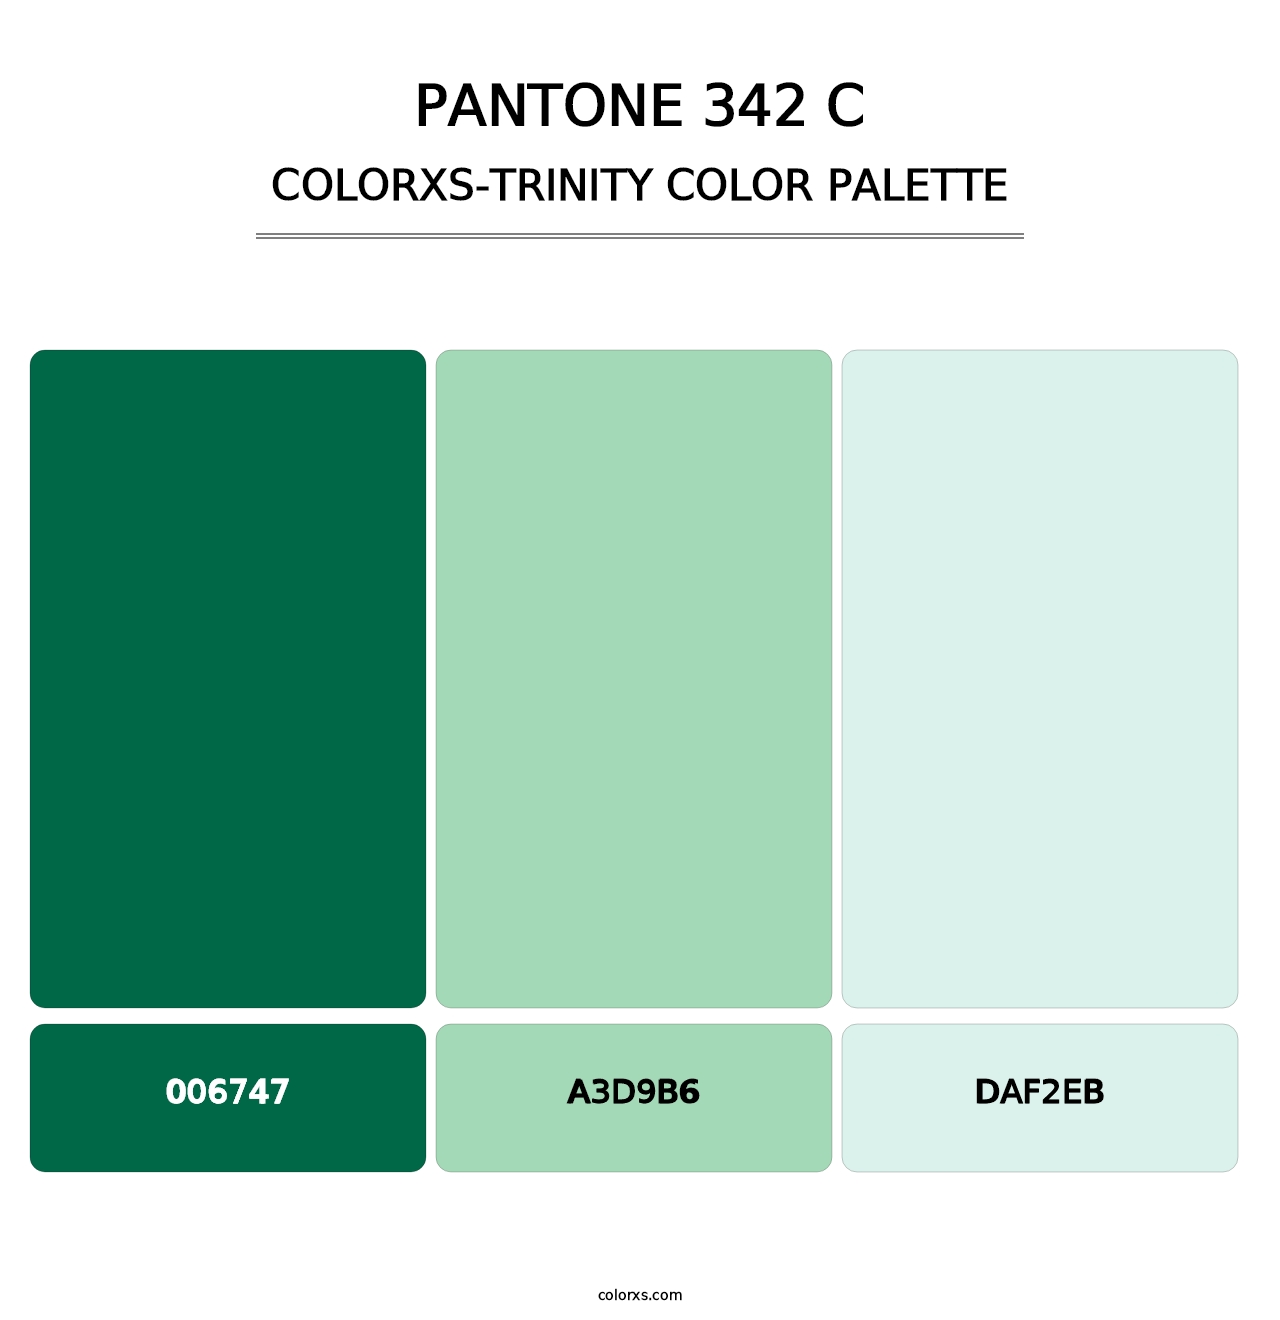 PANTONE 342 C - Colorxs Trinity Palette